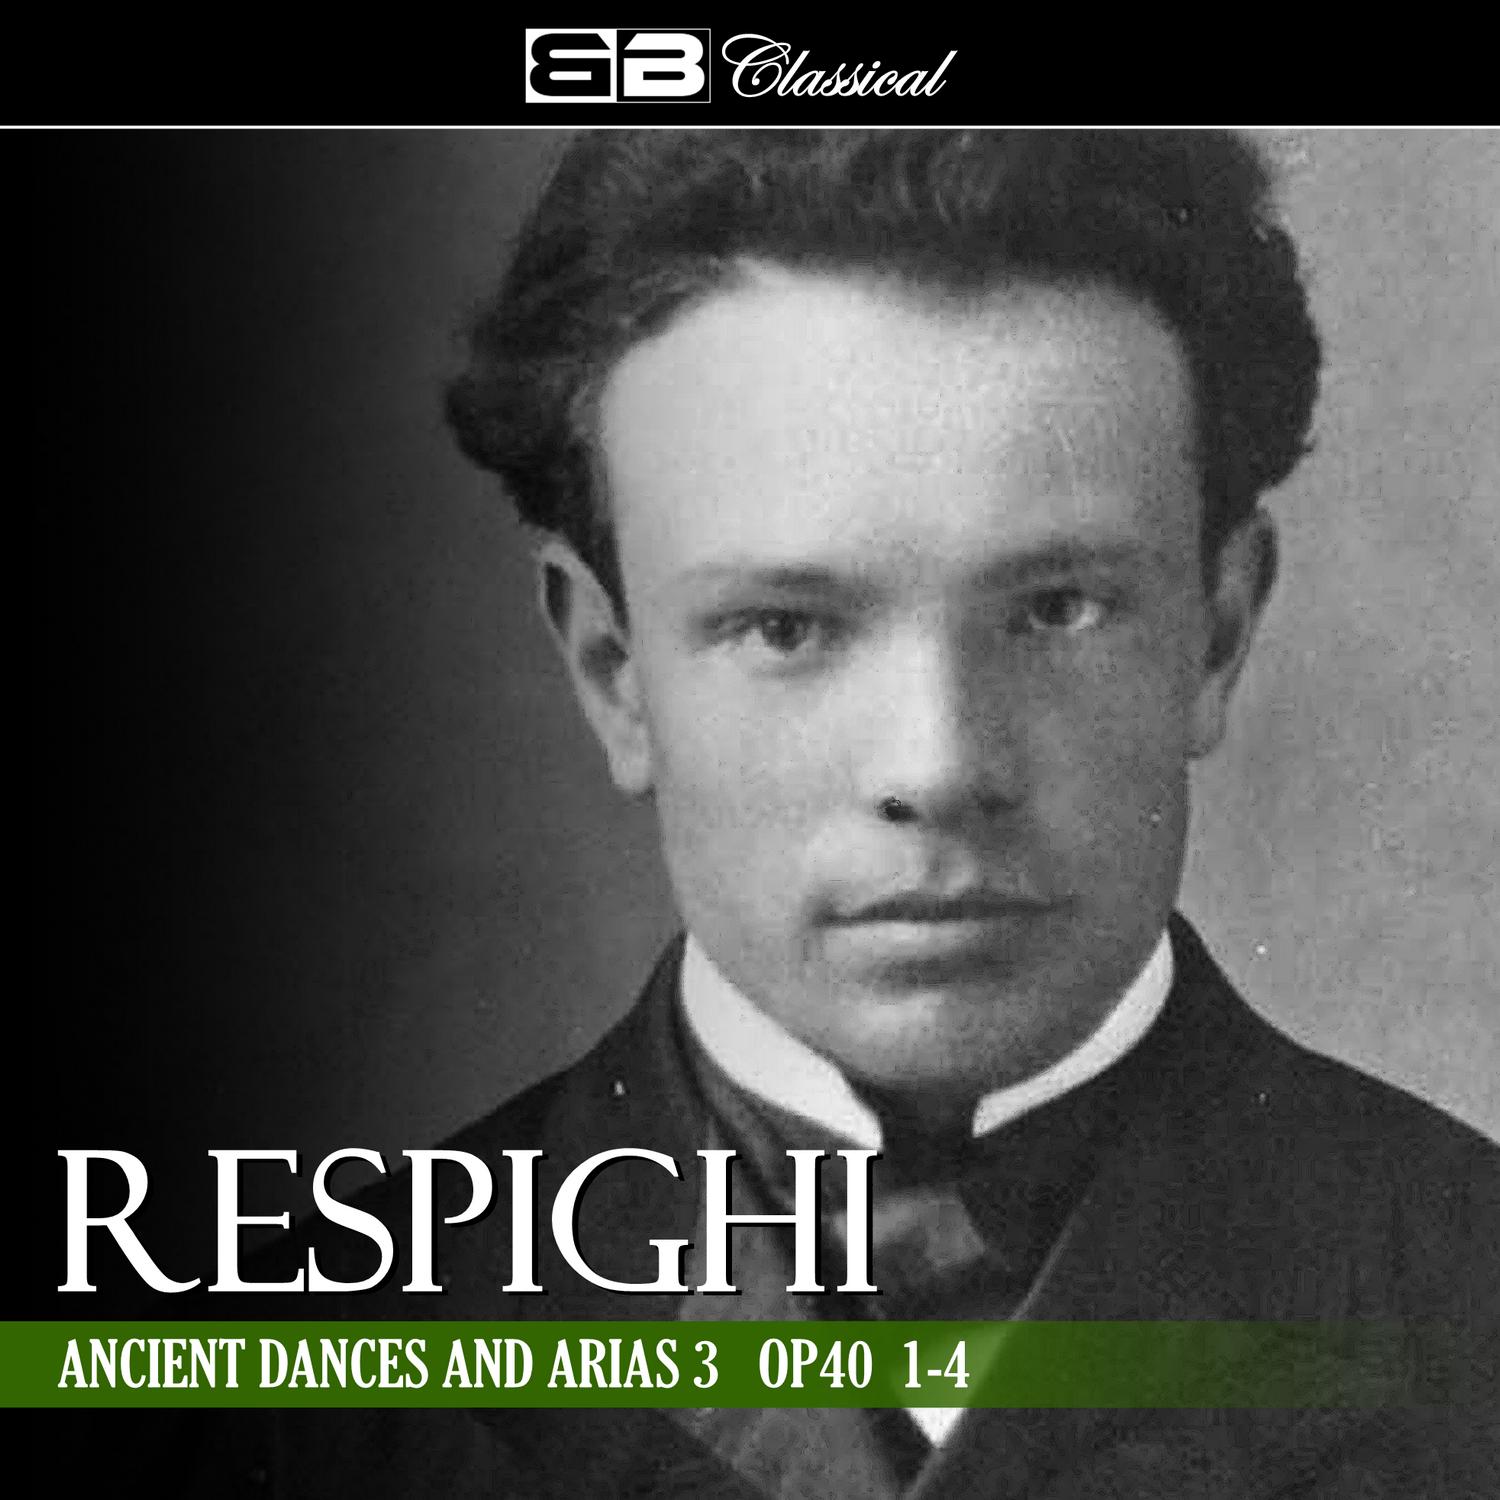 Respighi Ancient Dances and Arias 3 Op. 40 1-4